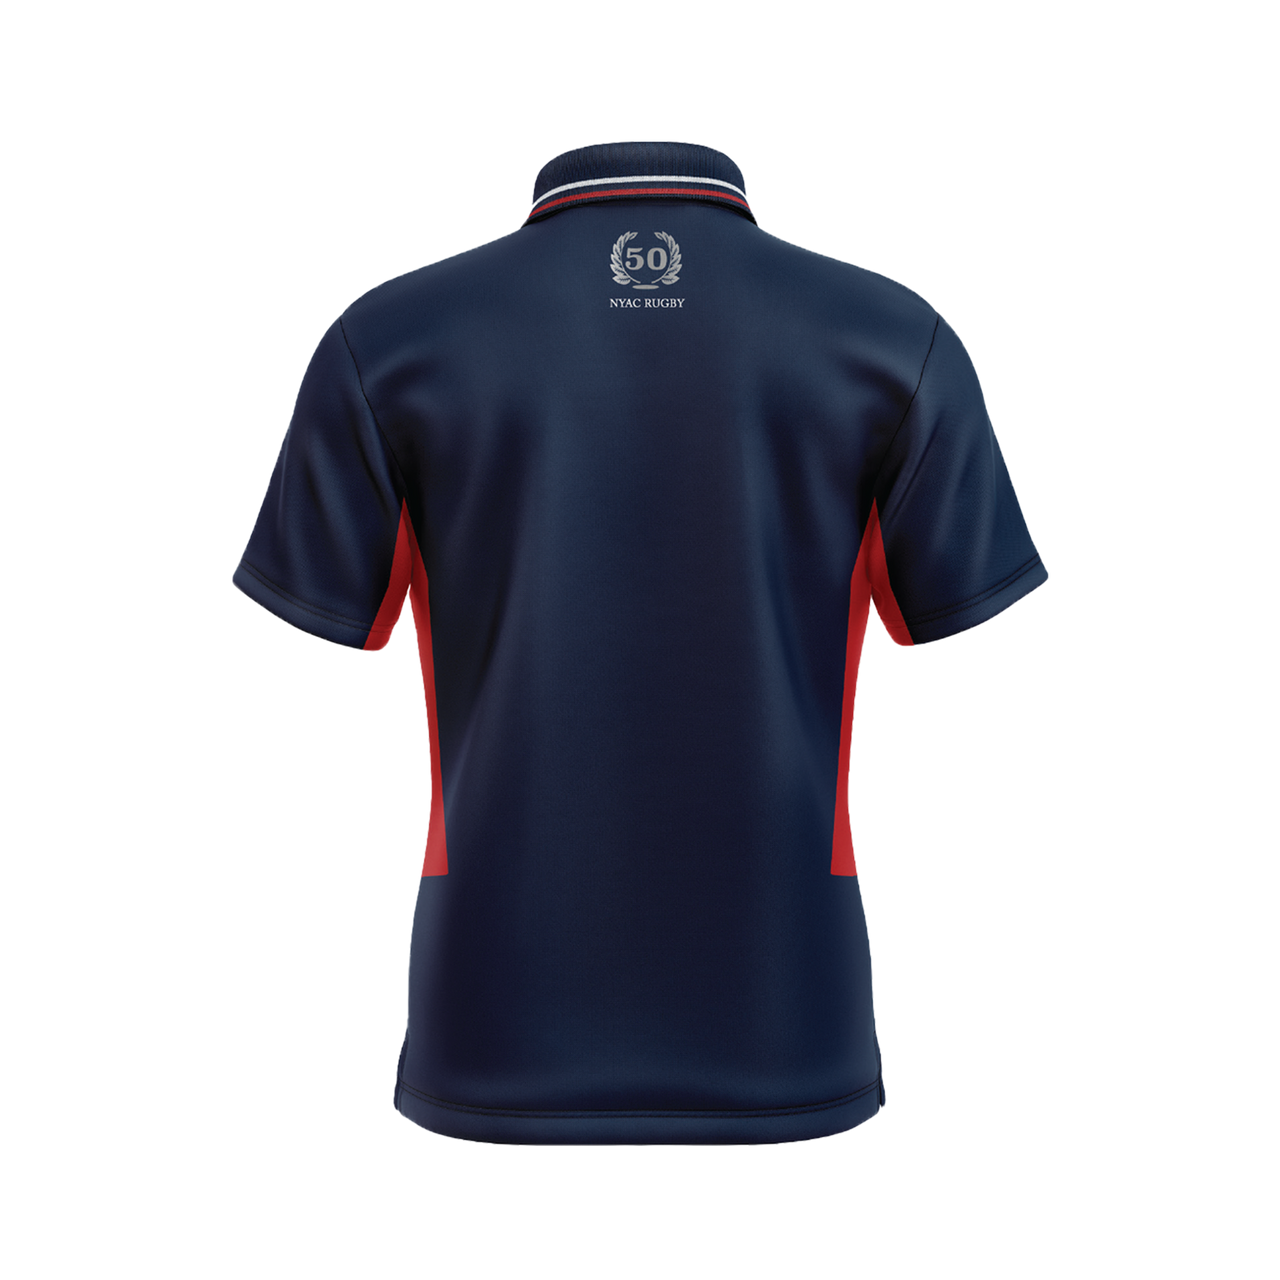 NYAC Rugby Men's Polo Shirt - Navy